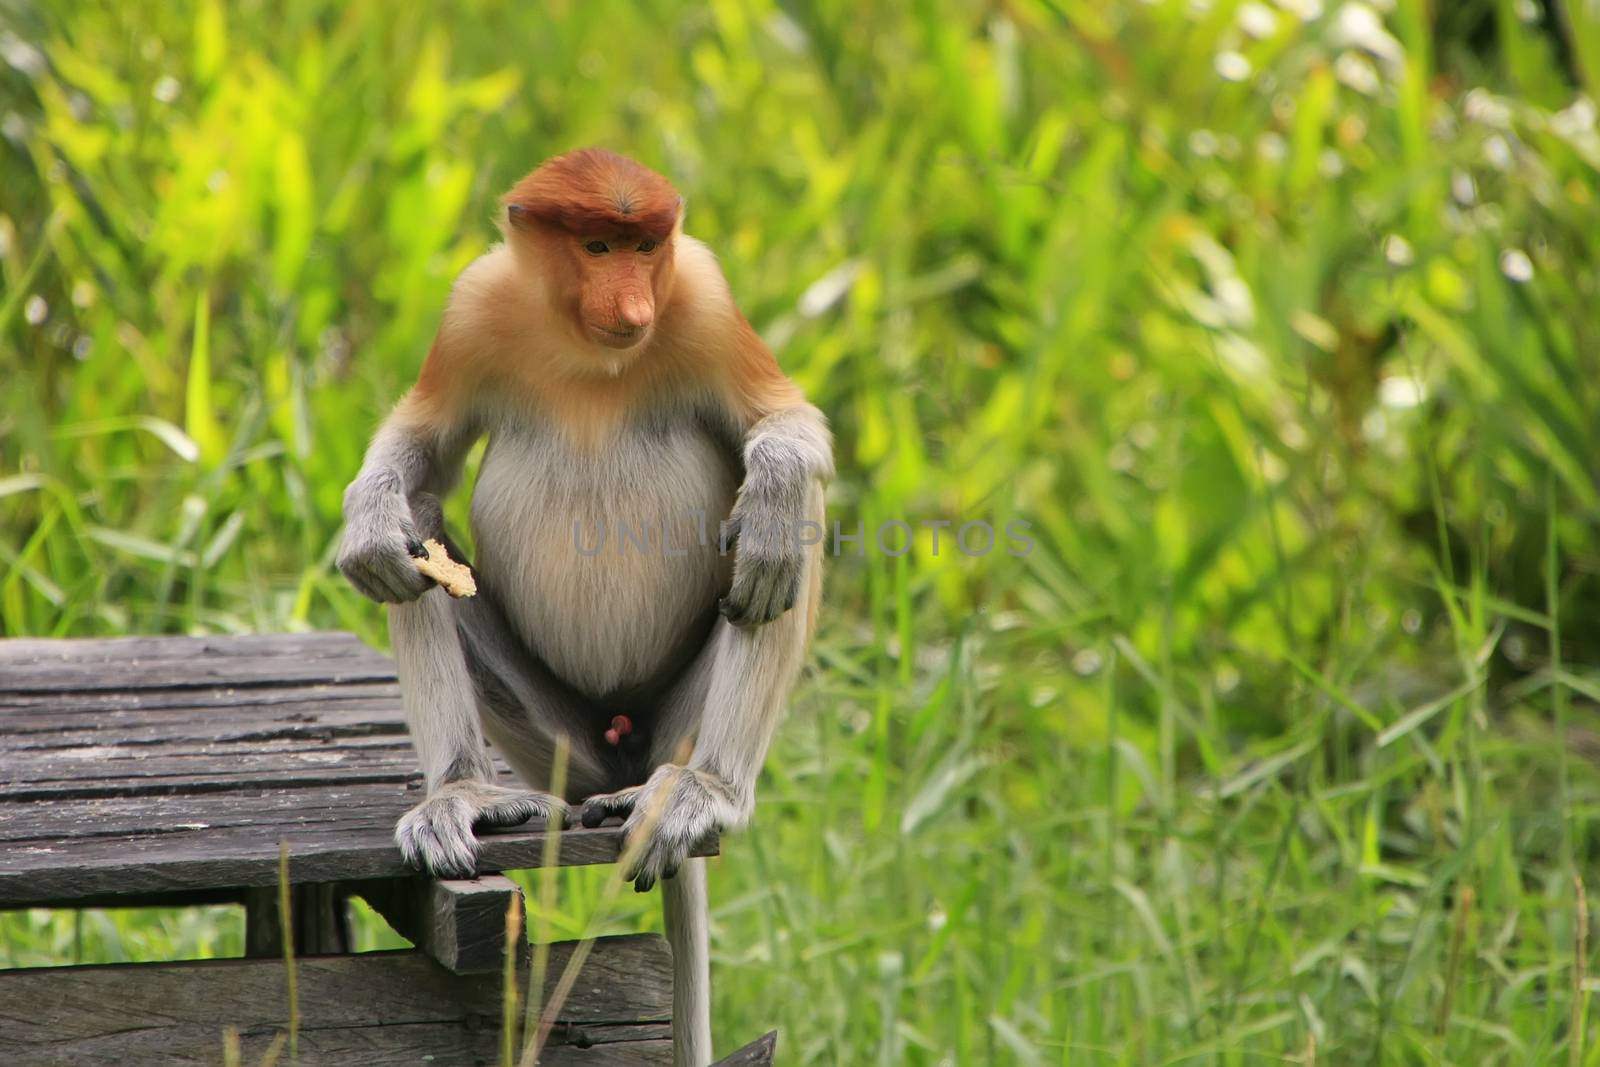 Proboscis monkey sitting on a feeding platform, Borneo, Malaysia by donya_nedomam